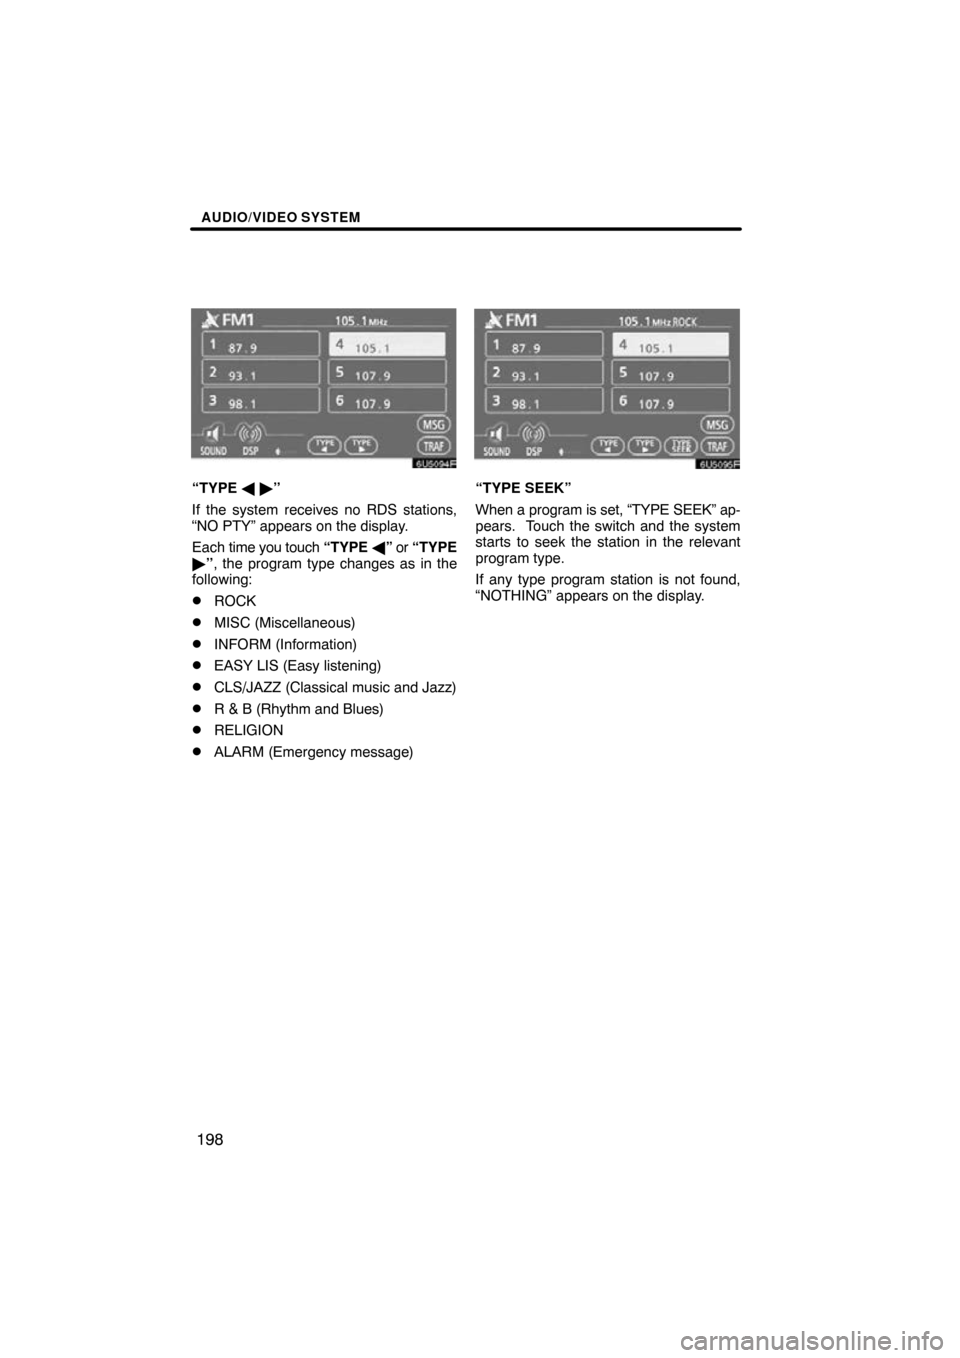 TOYOTA SIENNA 2009 XL20 / 2.G Navigation Manual AUDIO/VIDEO SYSTEM
198
“TYPE   ”
If the system receives no RDS stations,
“NO PTY” appears on the display.
Each  time you touch  “TYPE ” or “TYPE
 ”, the program type changes as in 